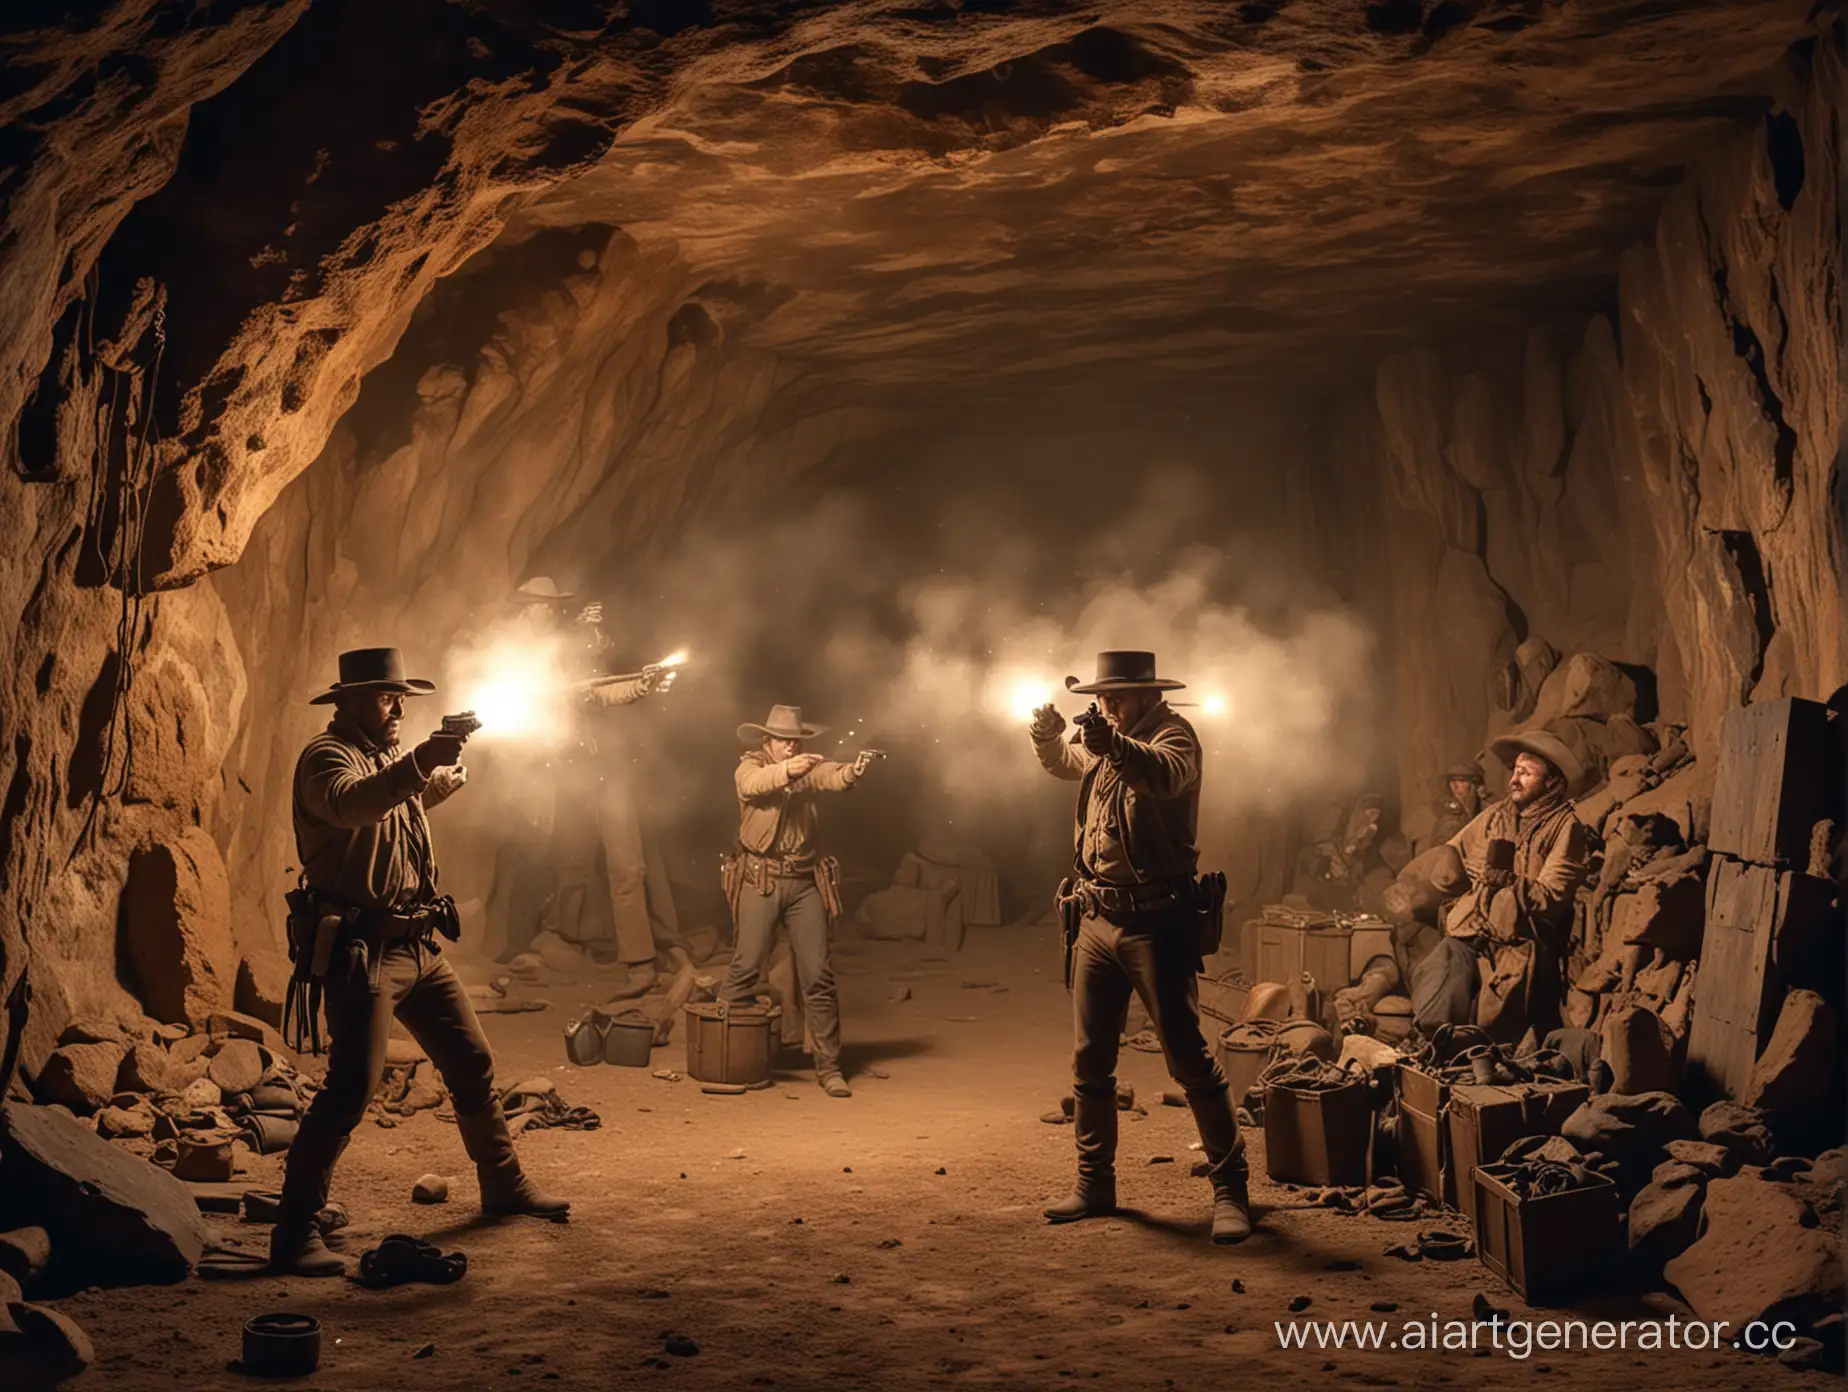 Bandits-Shooting-Revolvers-in-Dark-Miners-Cave-Wild-West-Scene